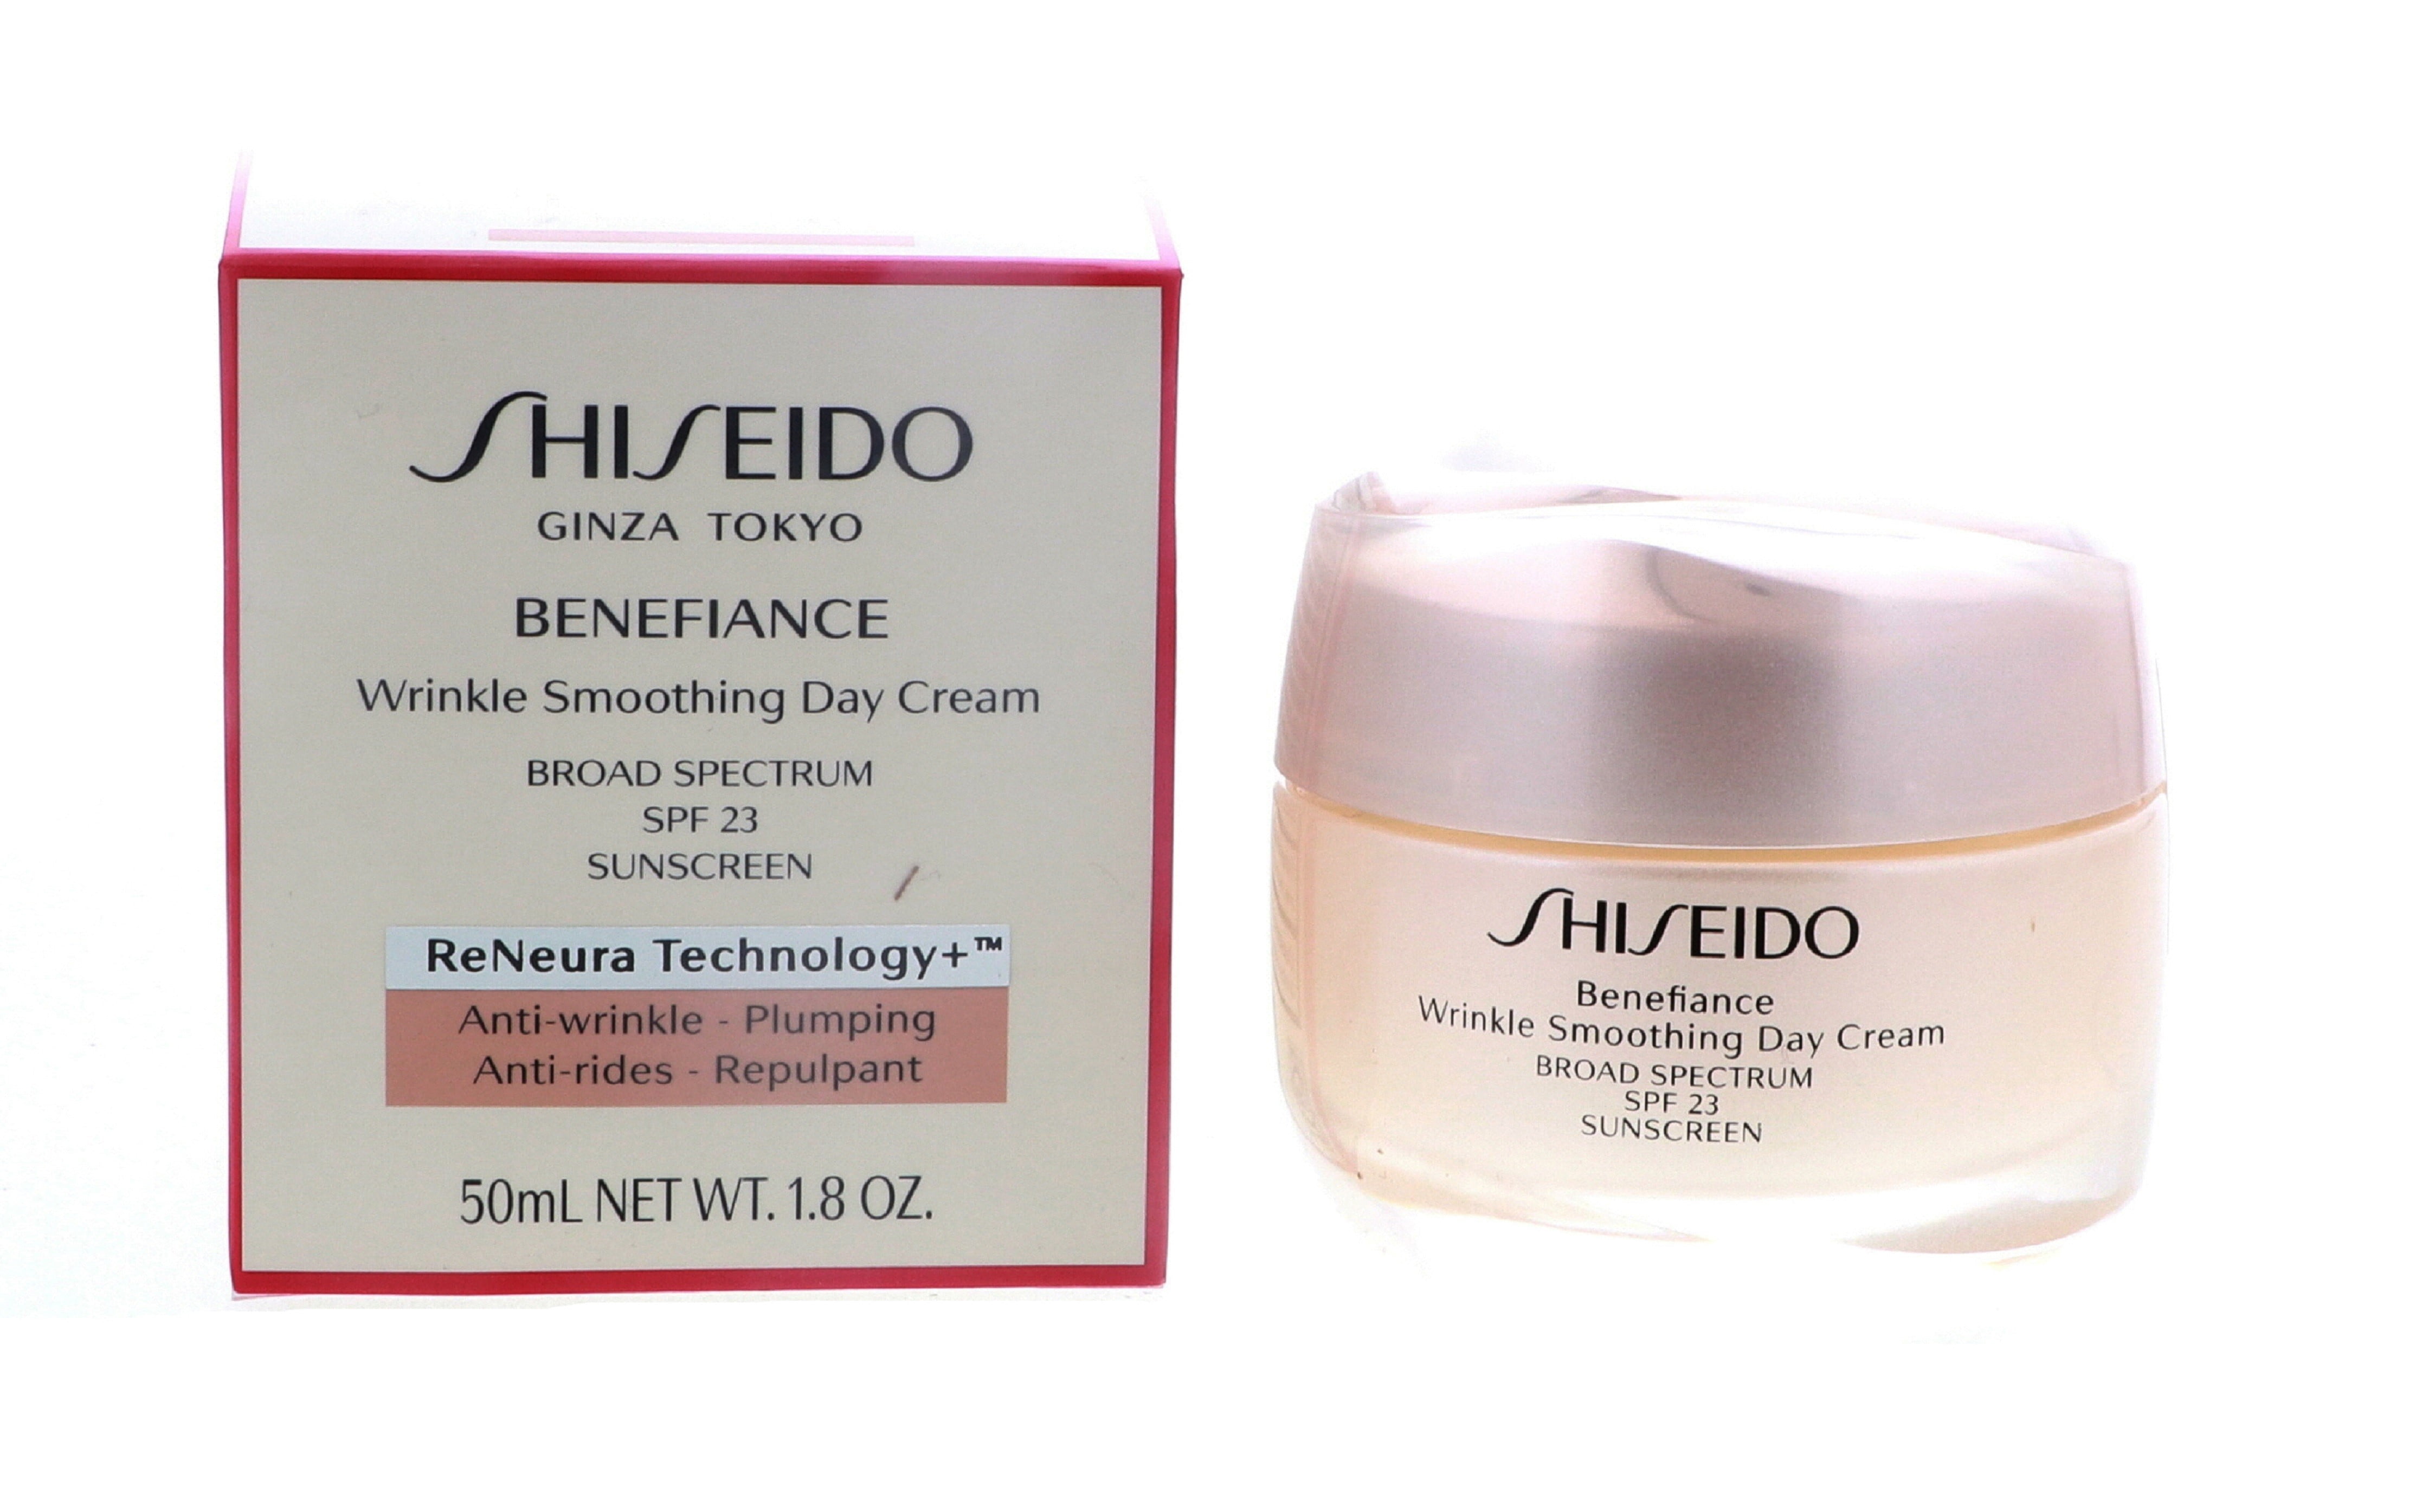 Shiseido benefiance wrinkle smoothing. Shiseido Ginza Tokyo Benefiance Wrinkle Smoothing Day Cream broad Spectrum SPF 23 Sunscreen.